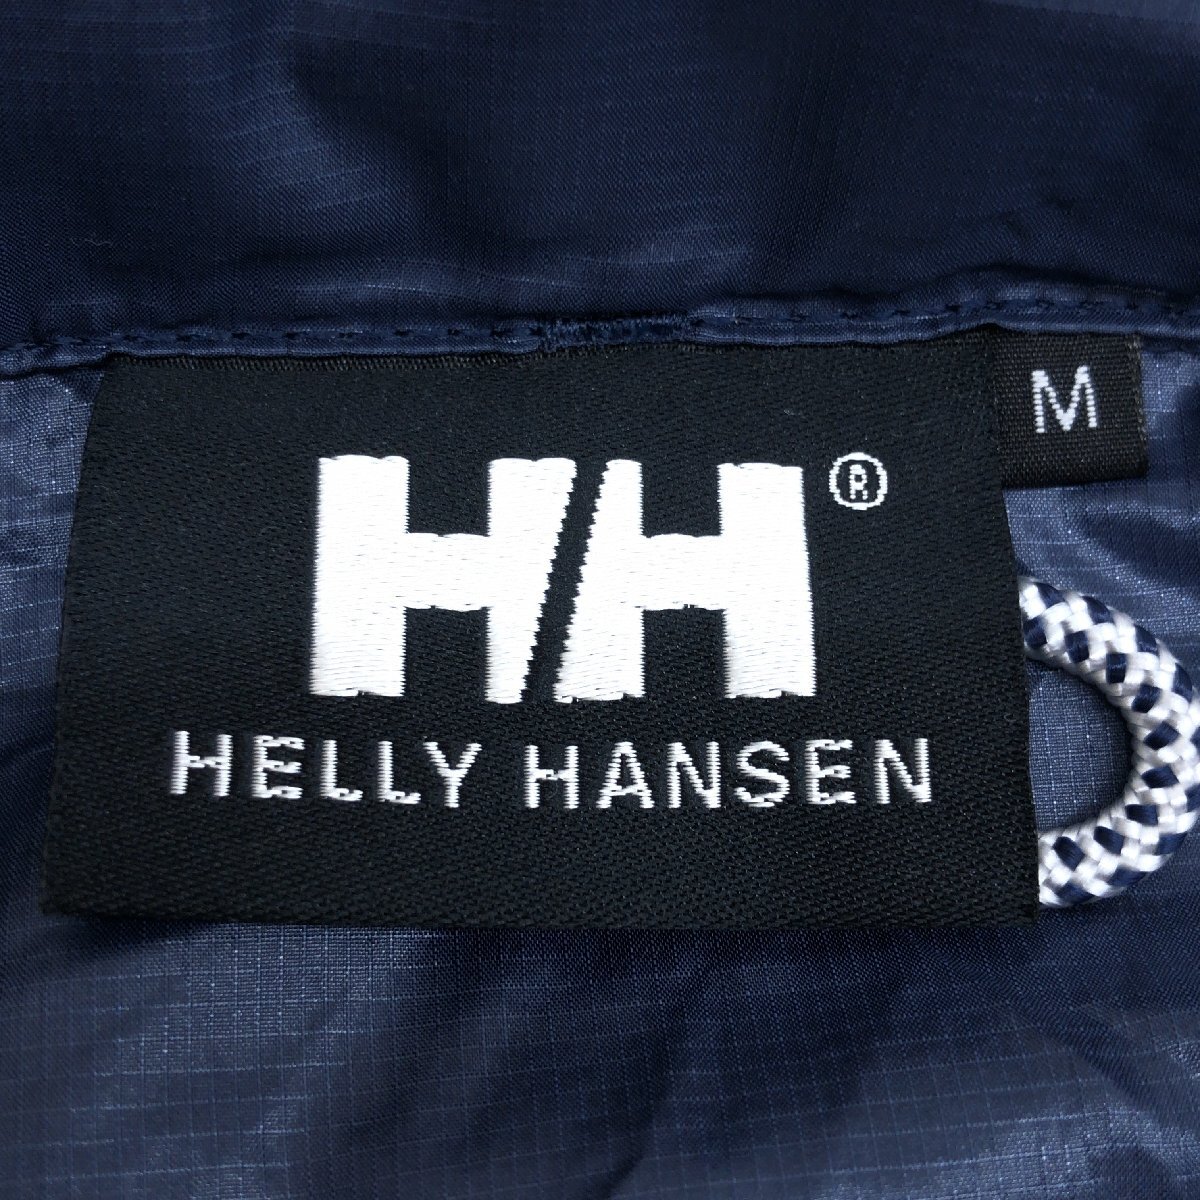 *HELLY HANSEN Helly Hansen обычная цена 16,500 иен MOLDE JACKET водоотталкивающий Wind брейкер уличный жакет M темно-синий темно-синий супер-легкий мужской 